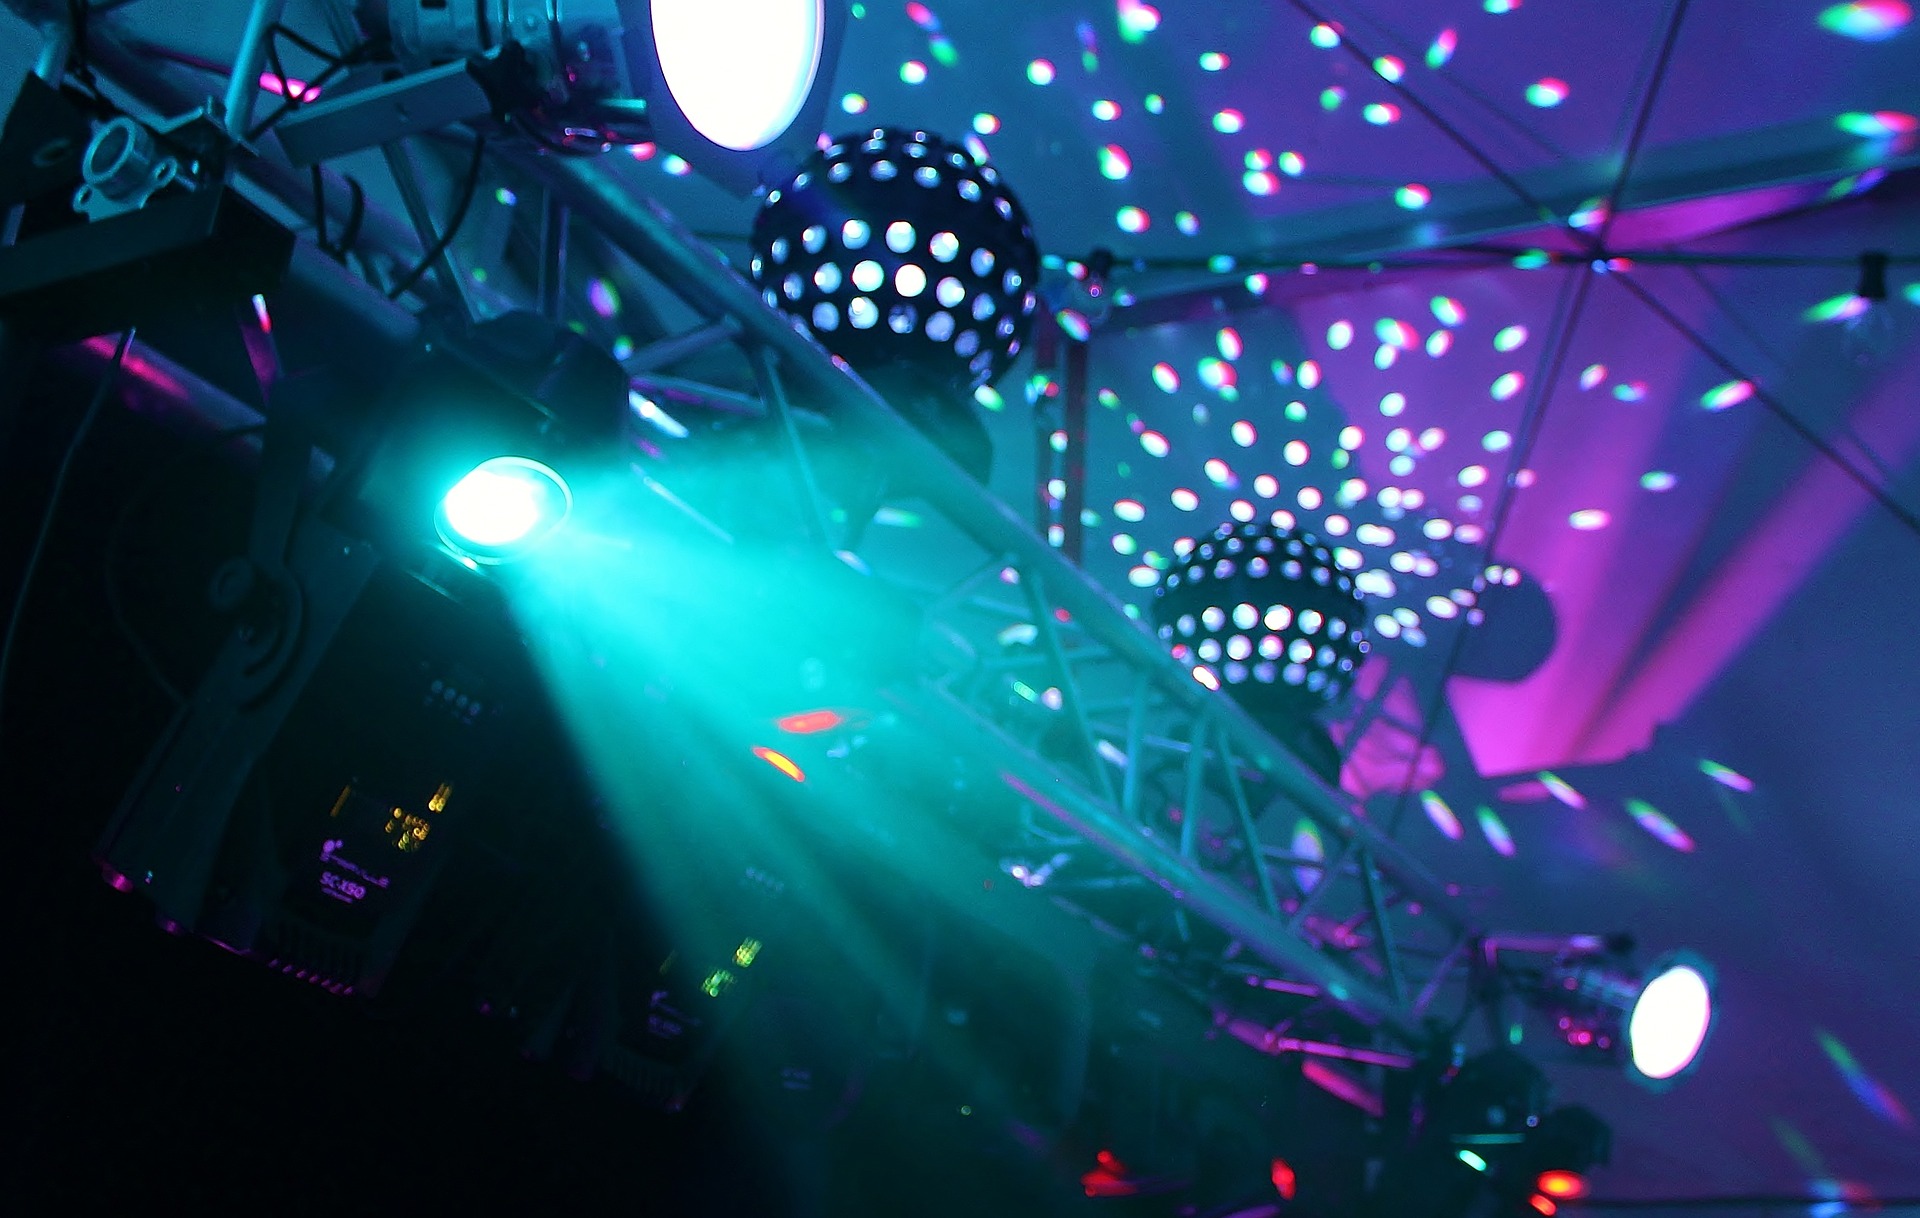 Blue and purple nightclub lighting